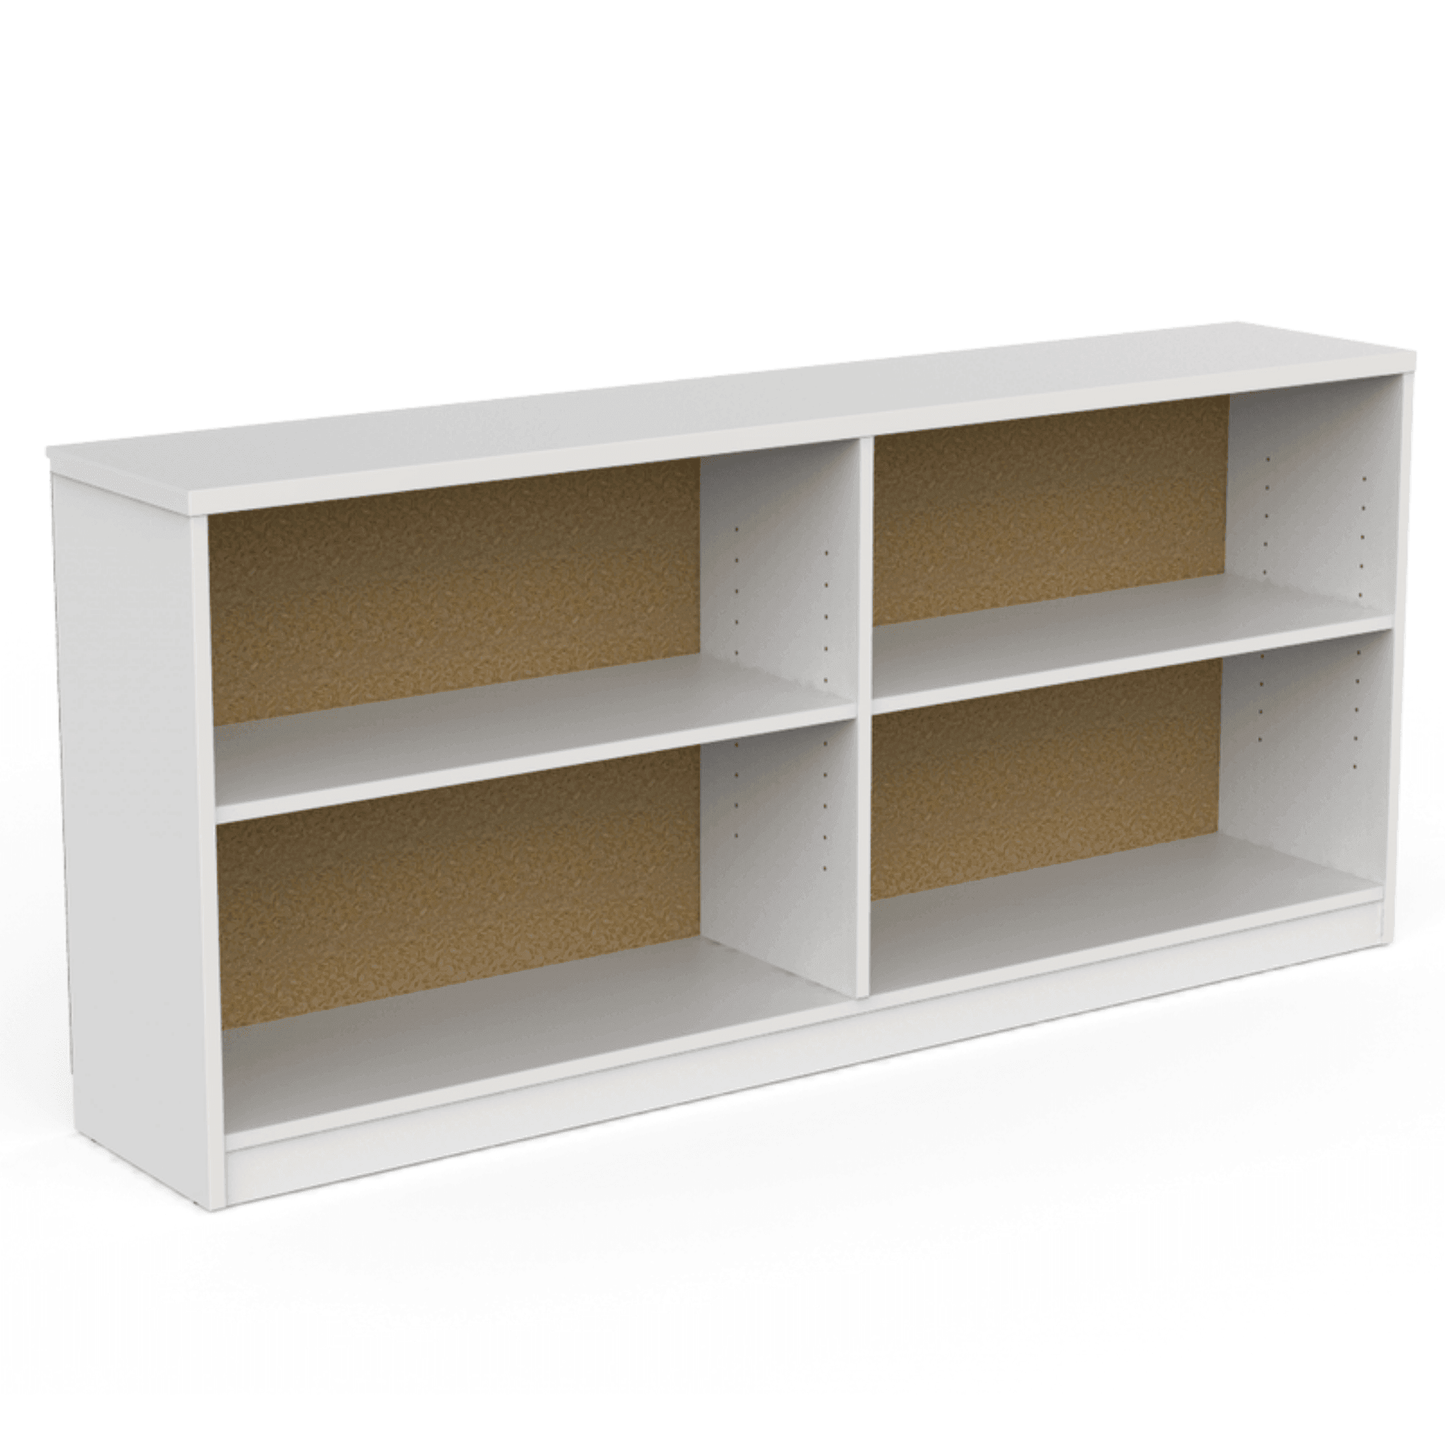 EkoSystem Credenza Bookcase - Office Furniture Company 